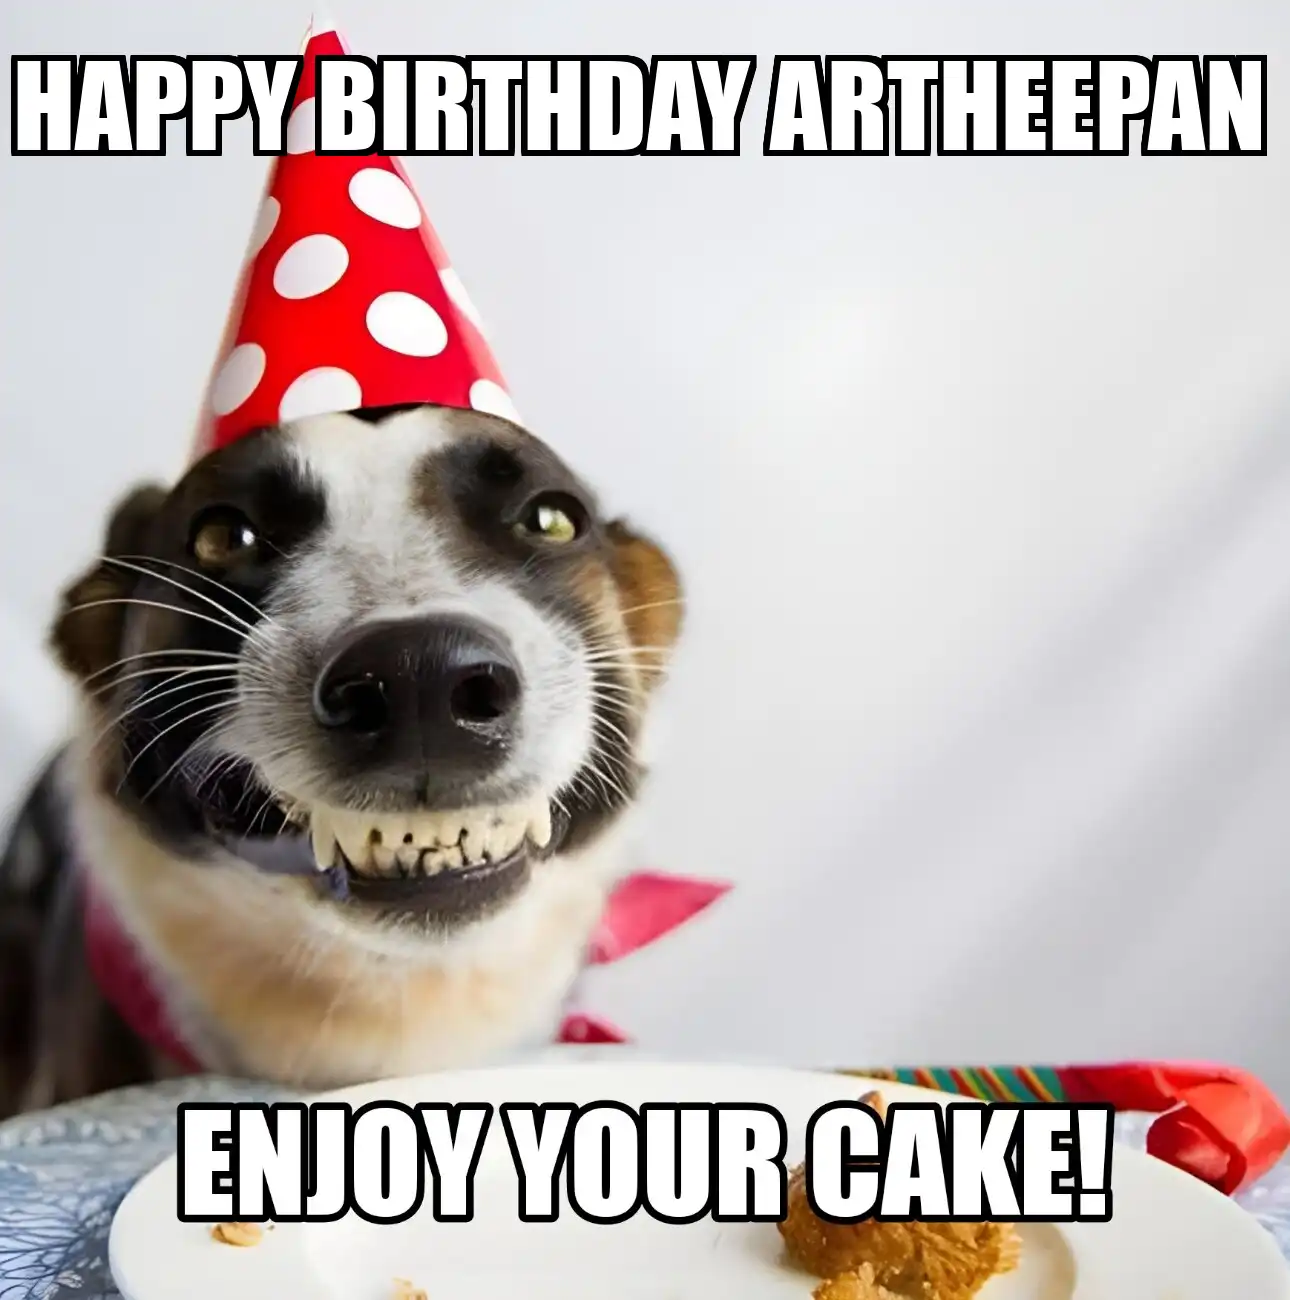 Happy Birthday Artheepan Enjoy Your Cake Dog Meme